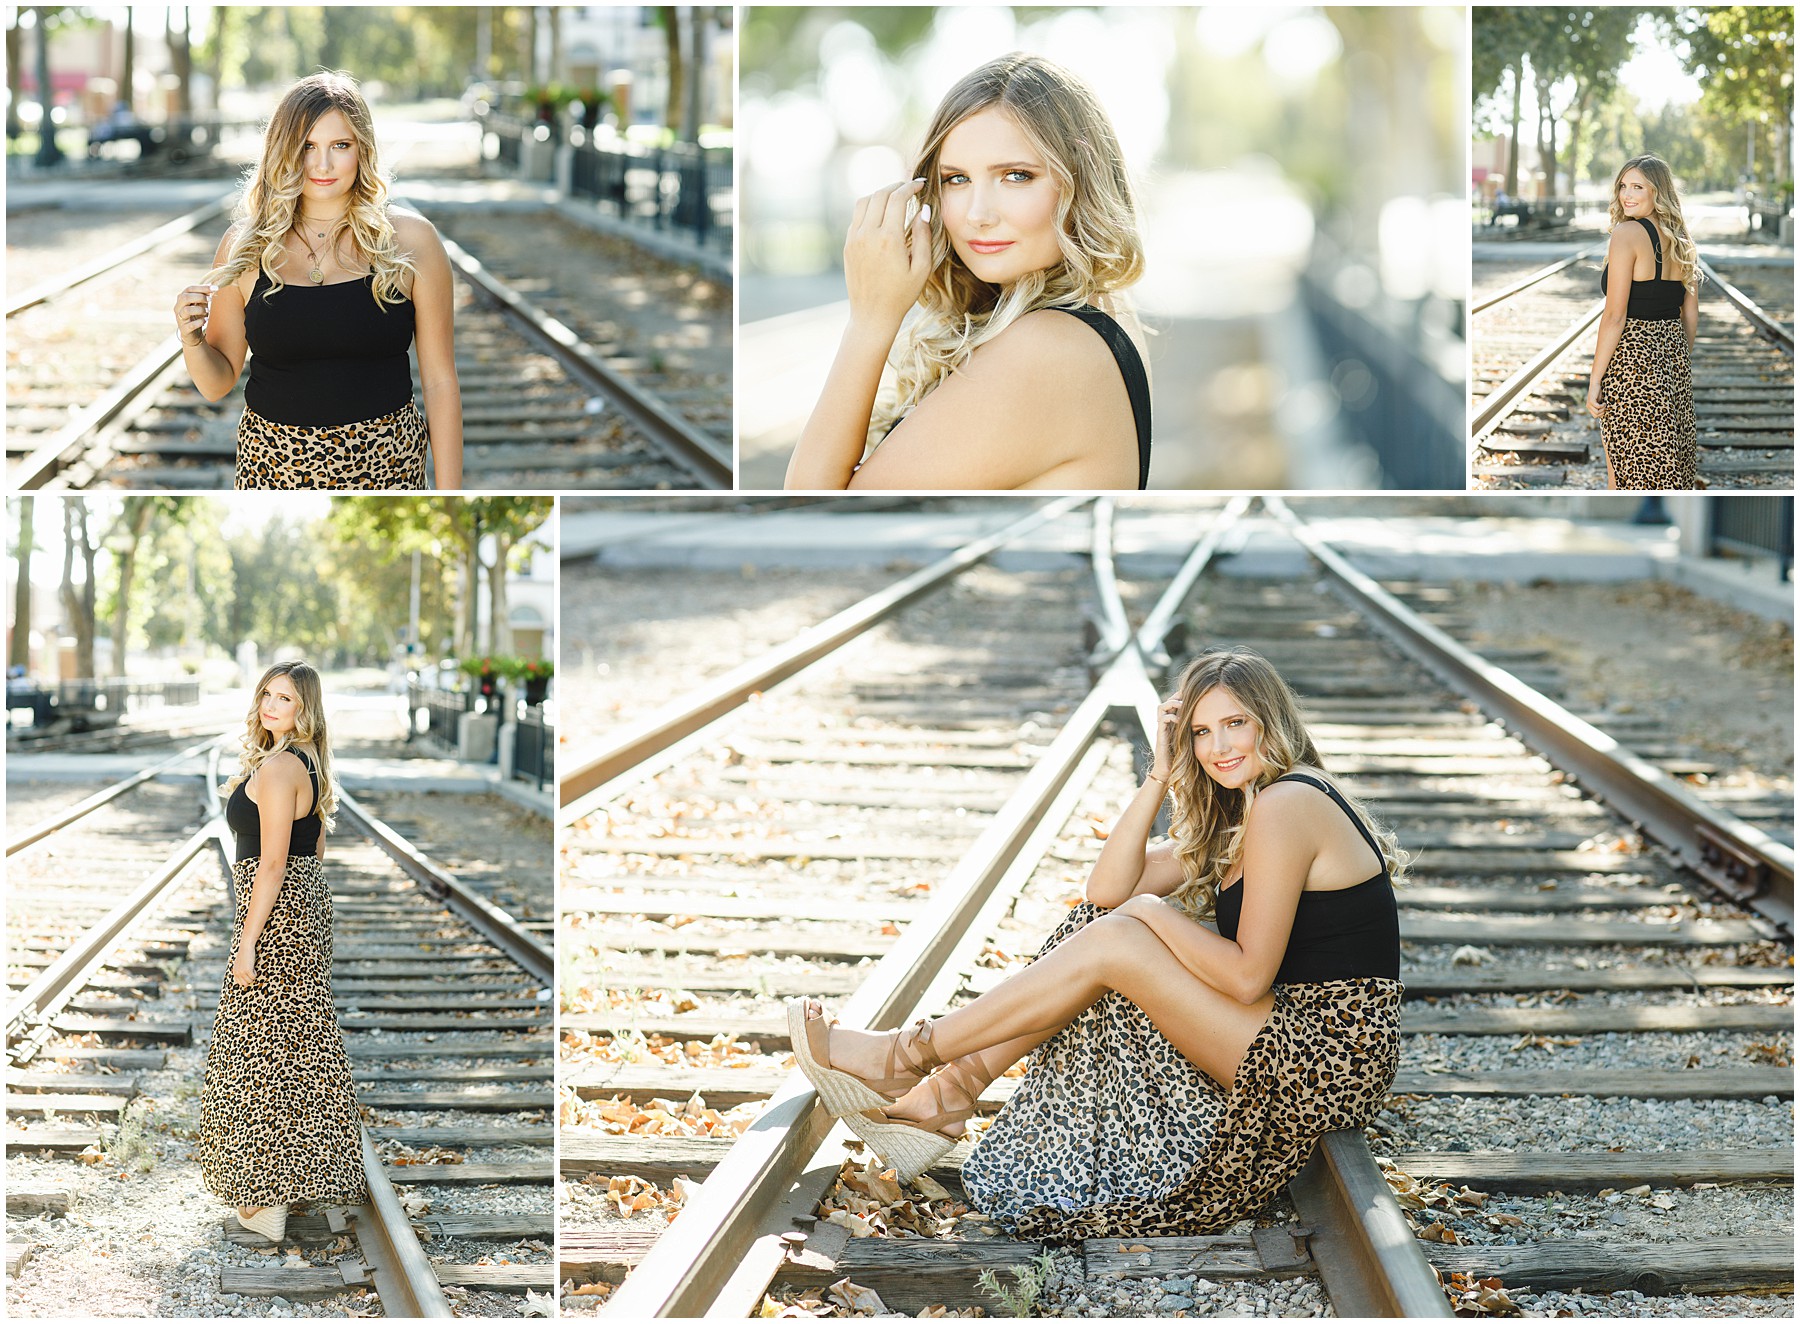 cheetah skirt black tank top senior picture outfit ideas by tara rochelle railroad tracks background